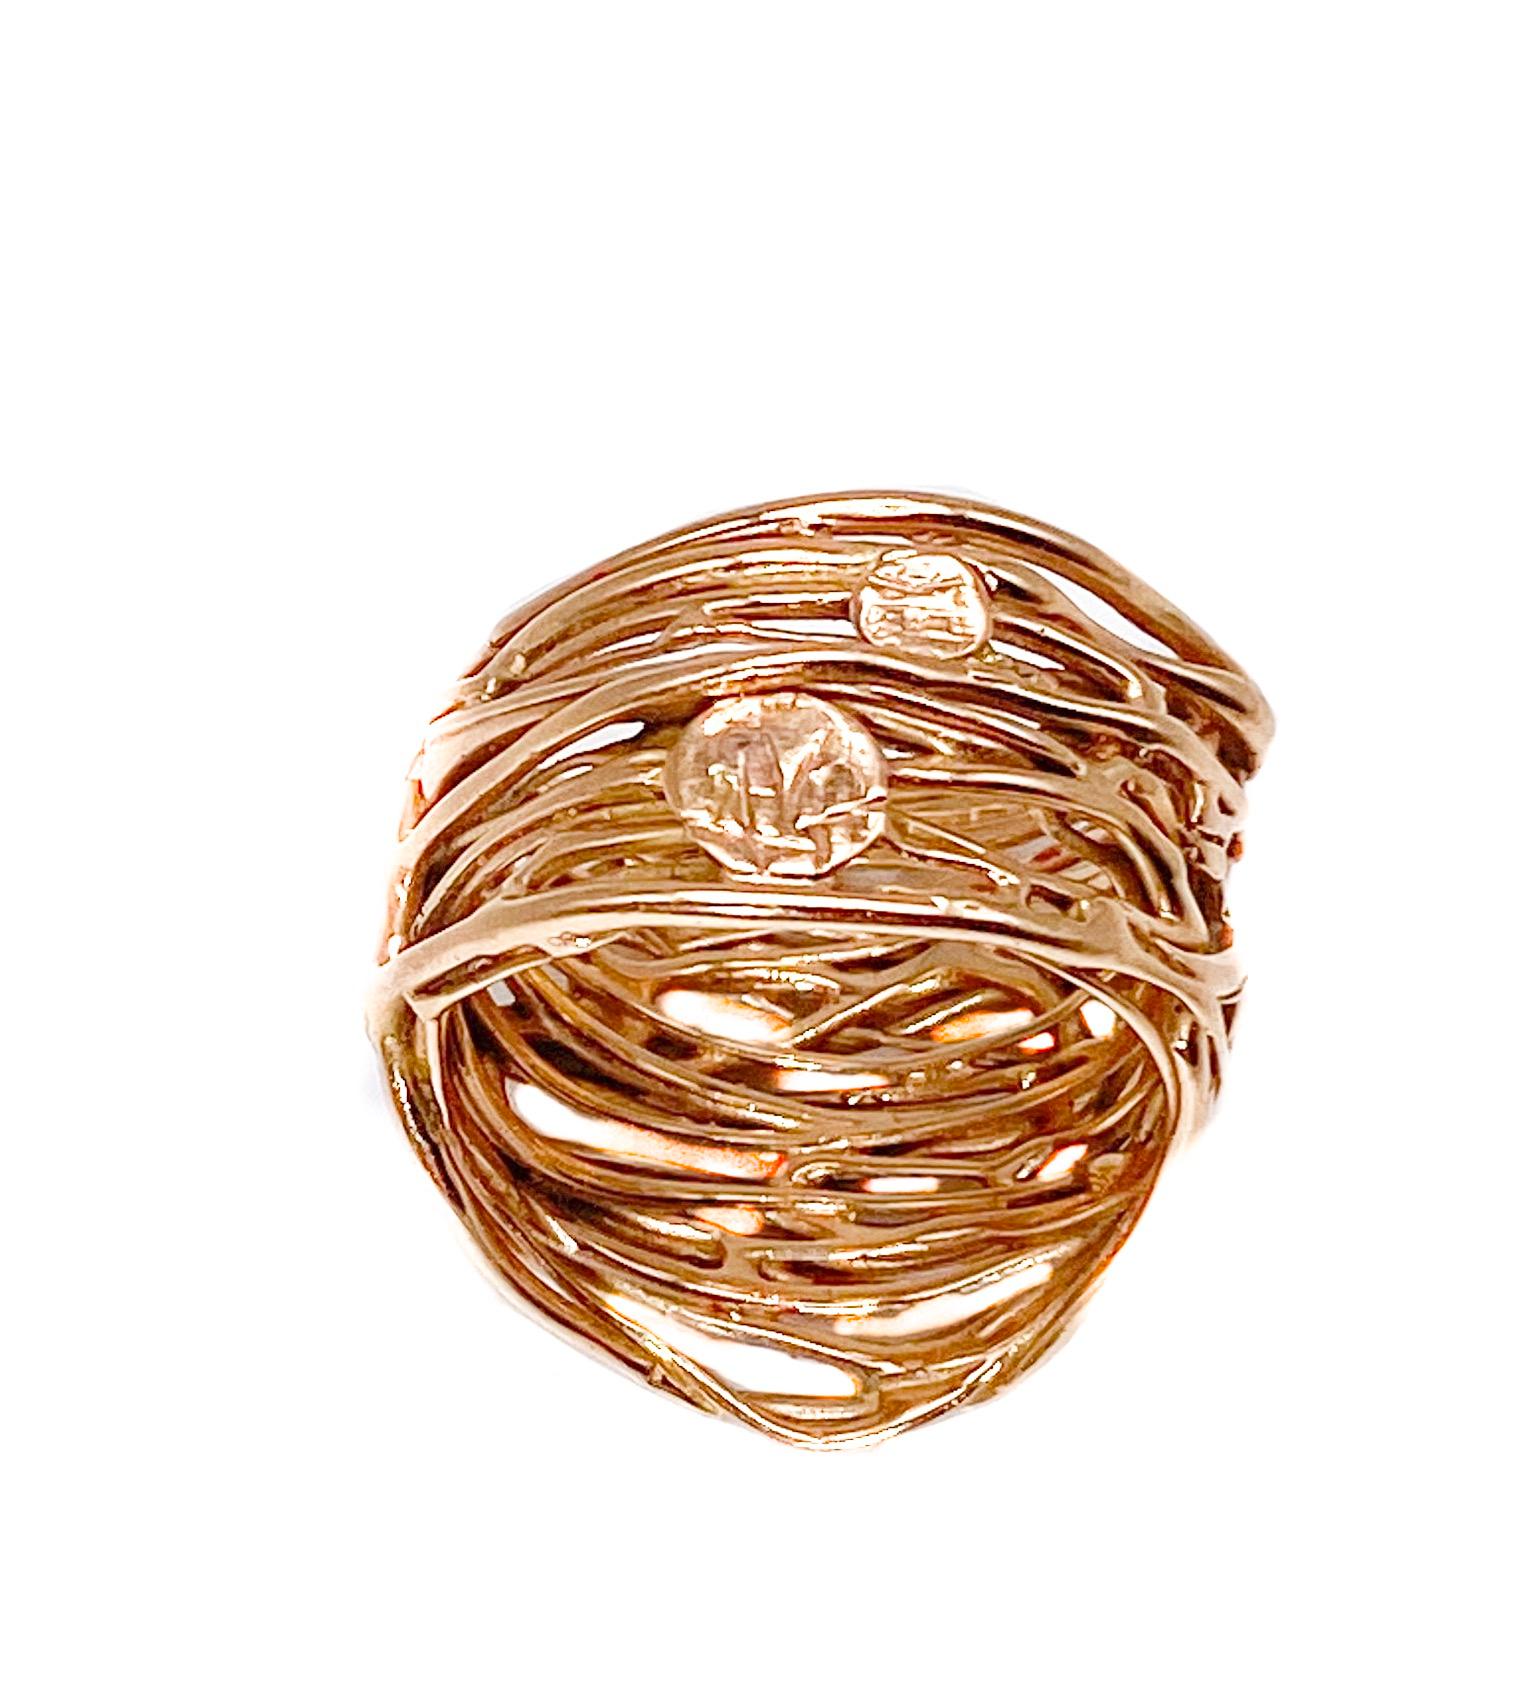 Contemporary 18 Karat Rose Gold Millefili Ring with Diamonds